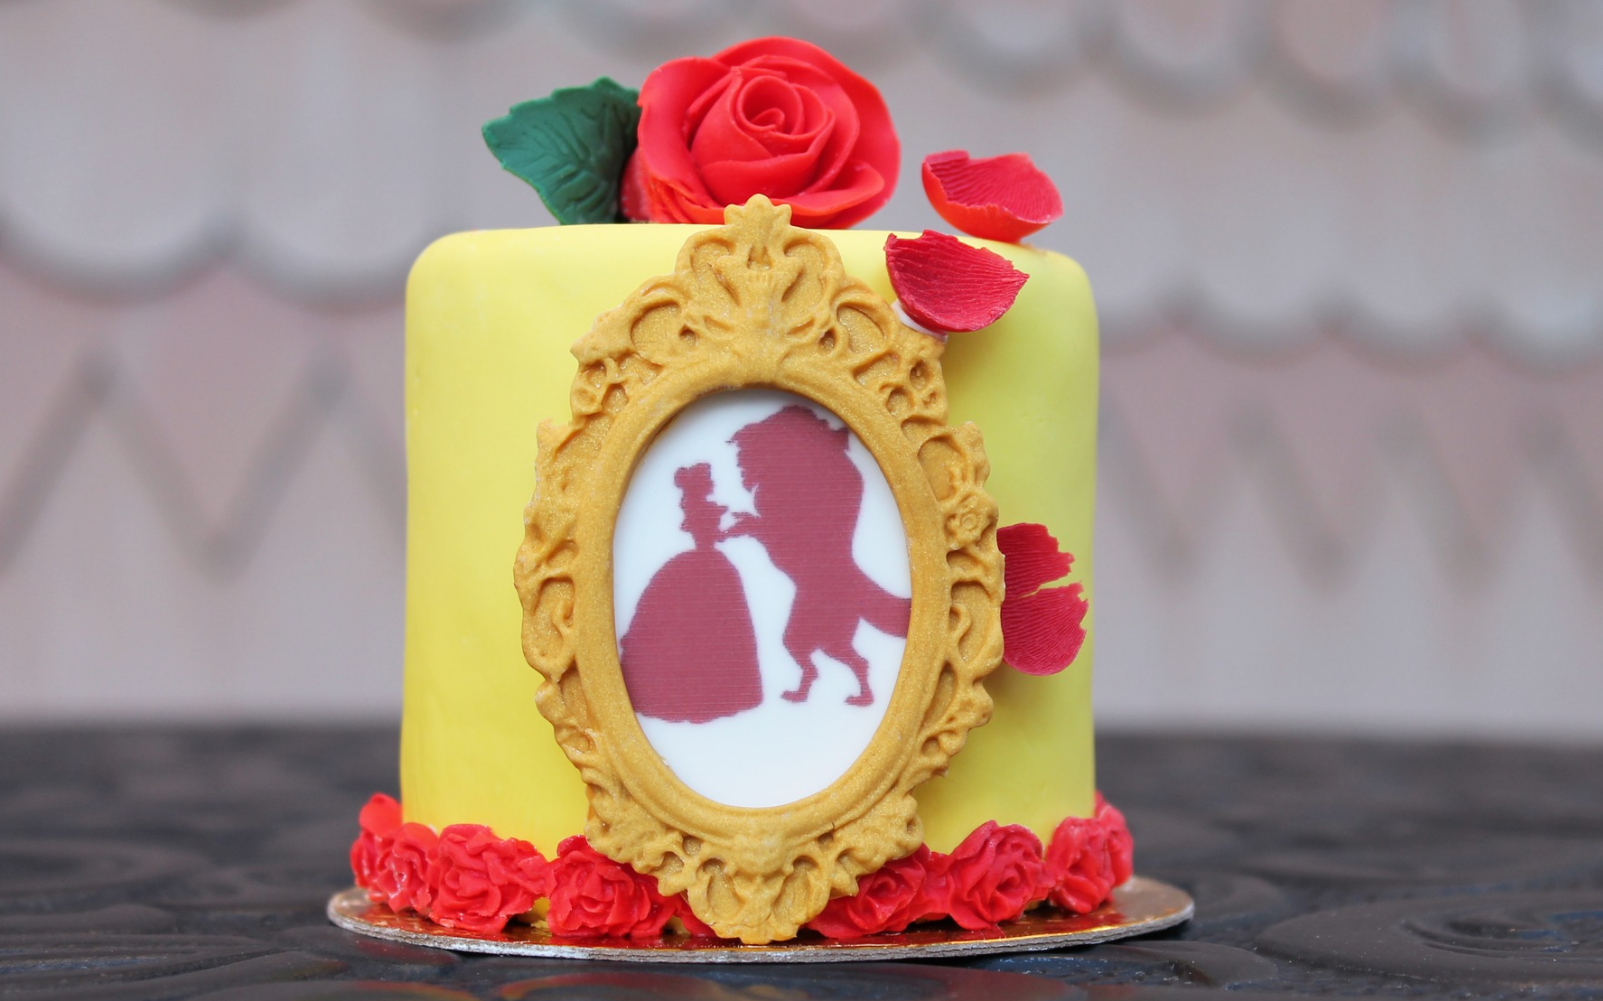 Send beauty or beast cake online by GiftJaipur in Rajasthan